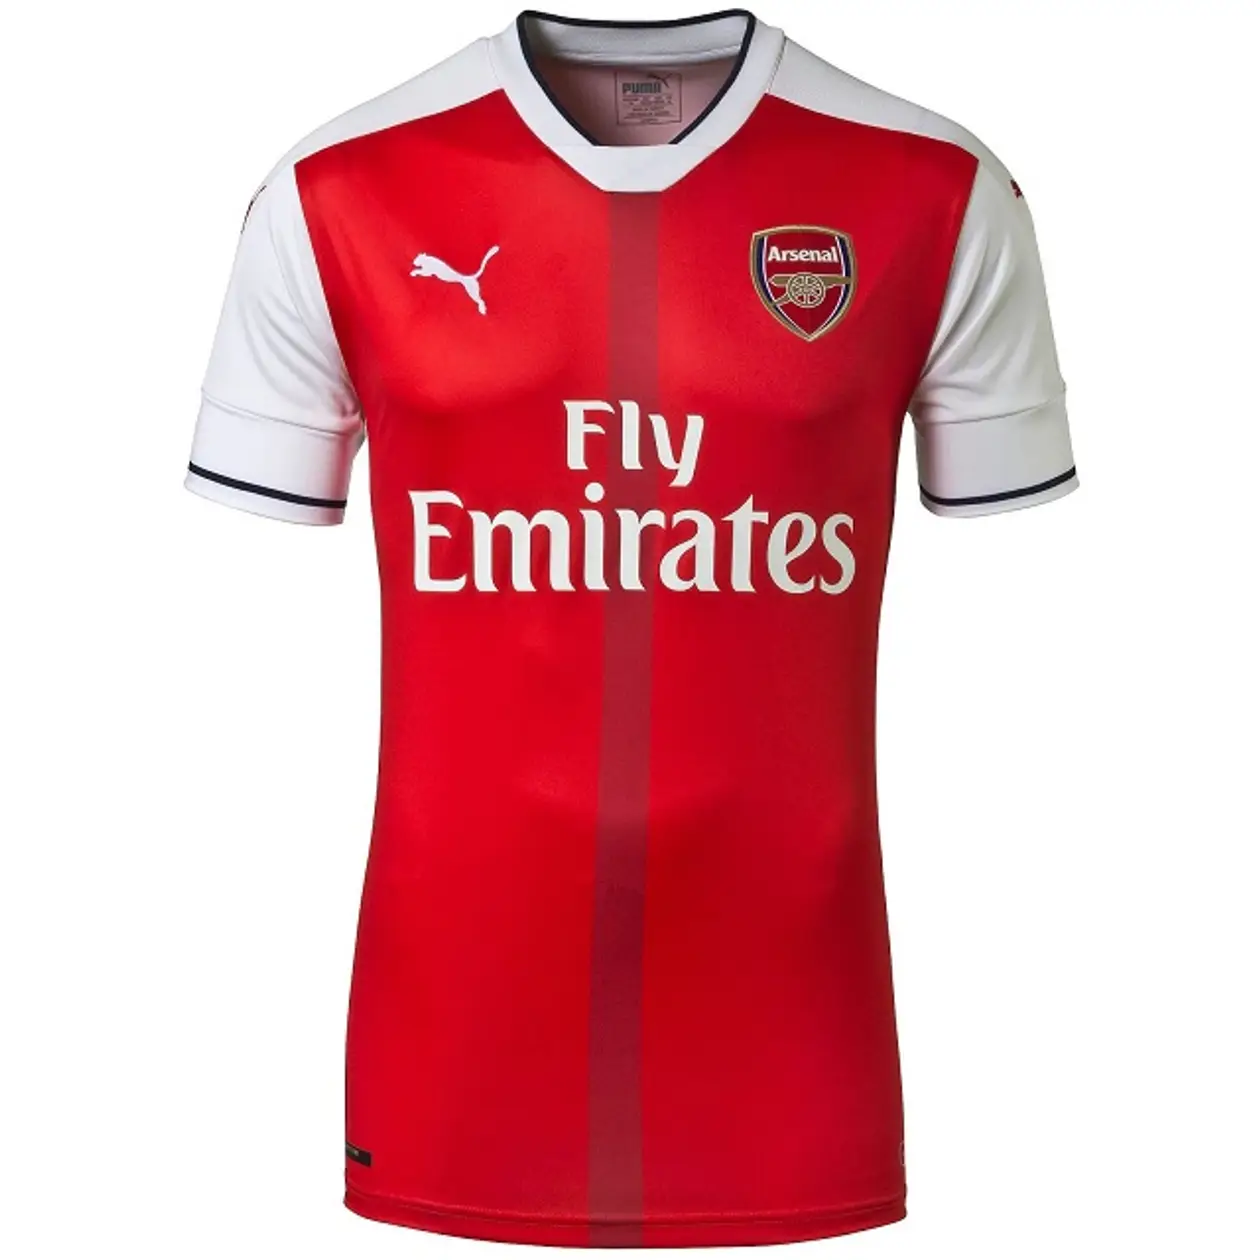 Новая форма «Арсенала» на сезон 2016/17